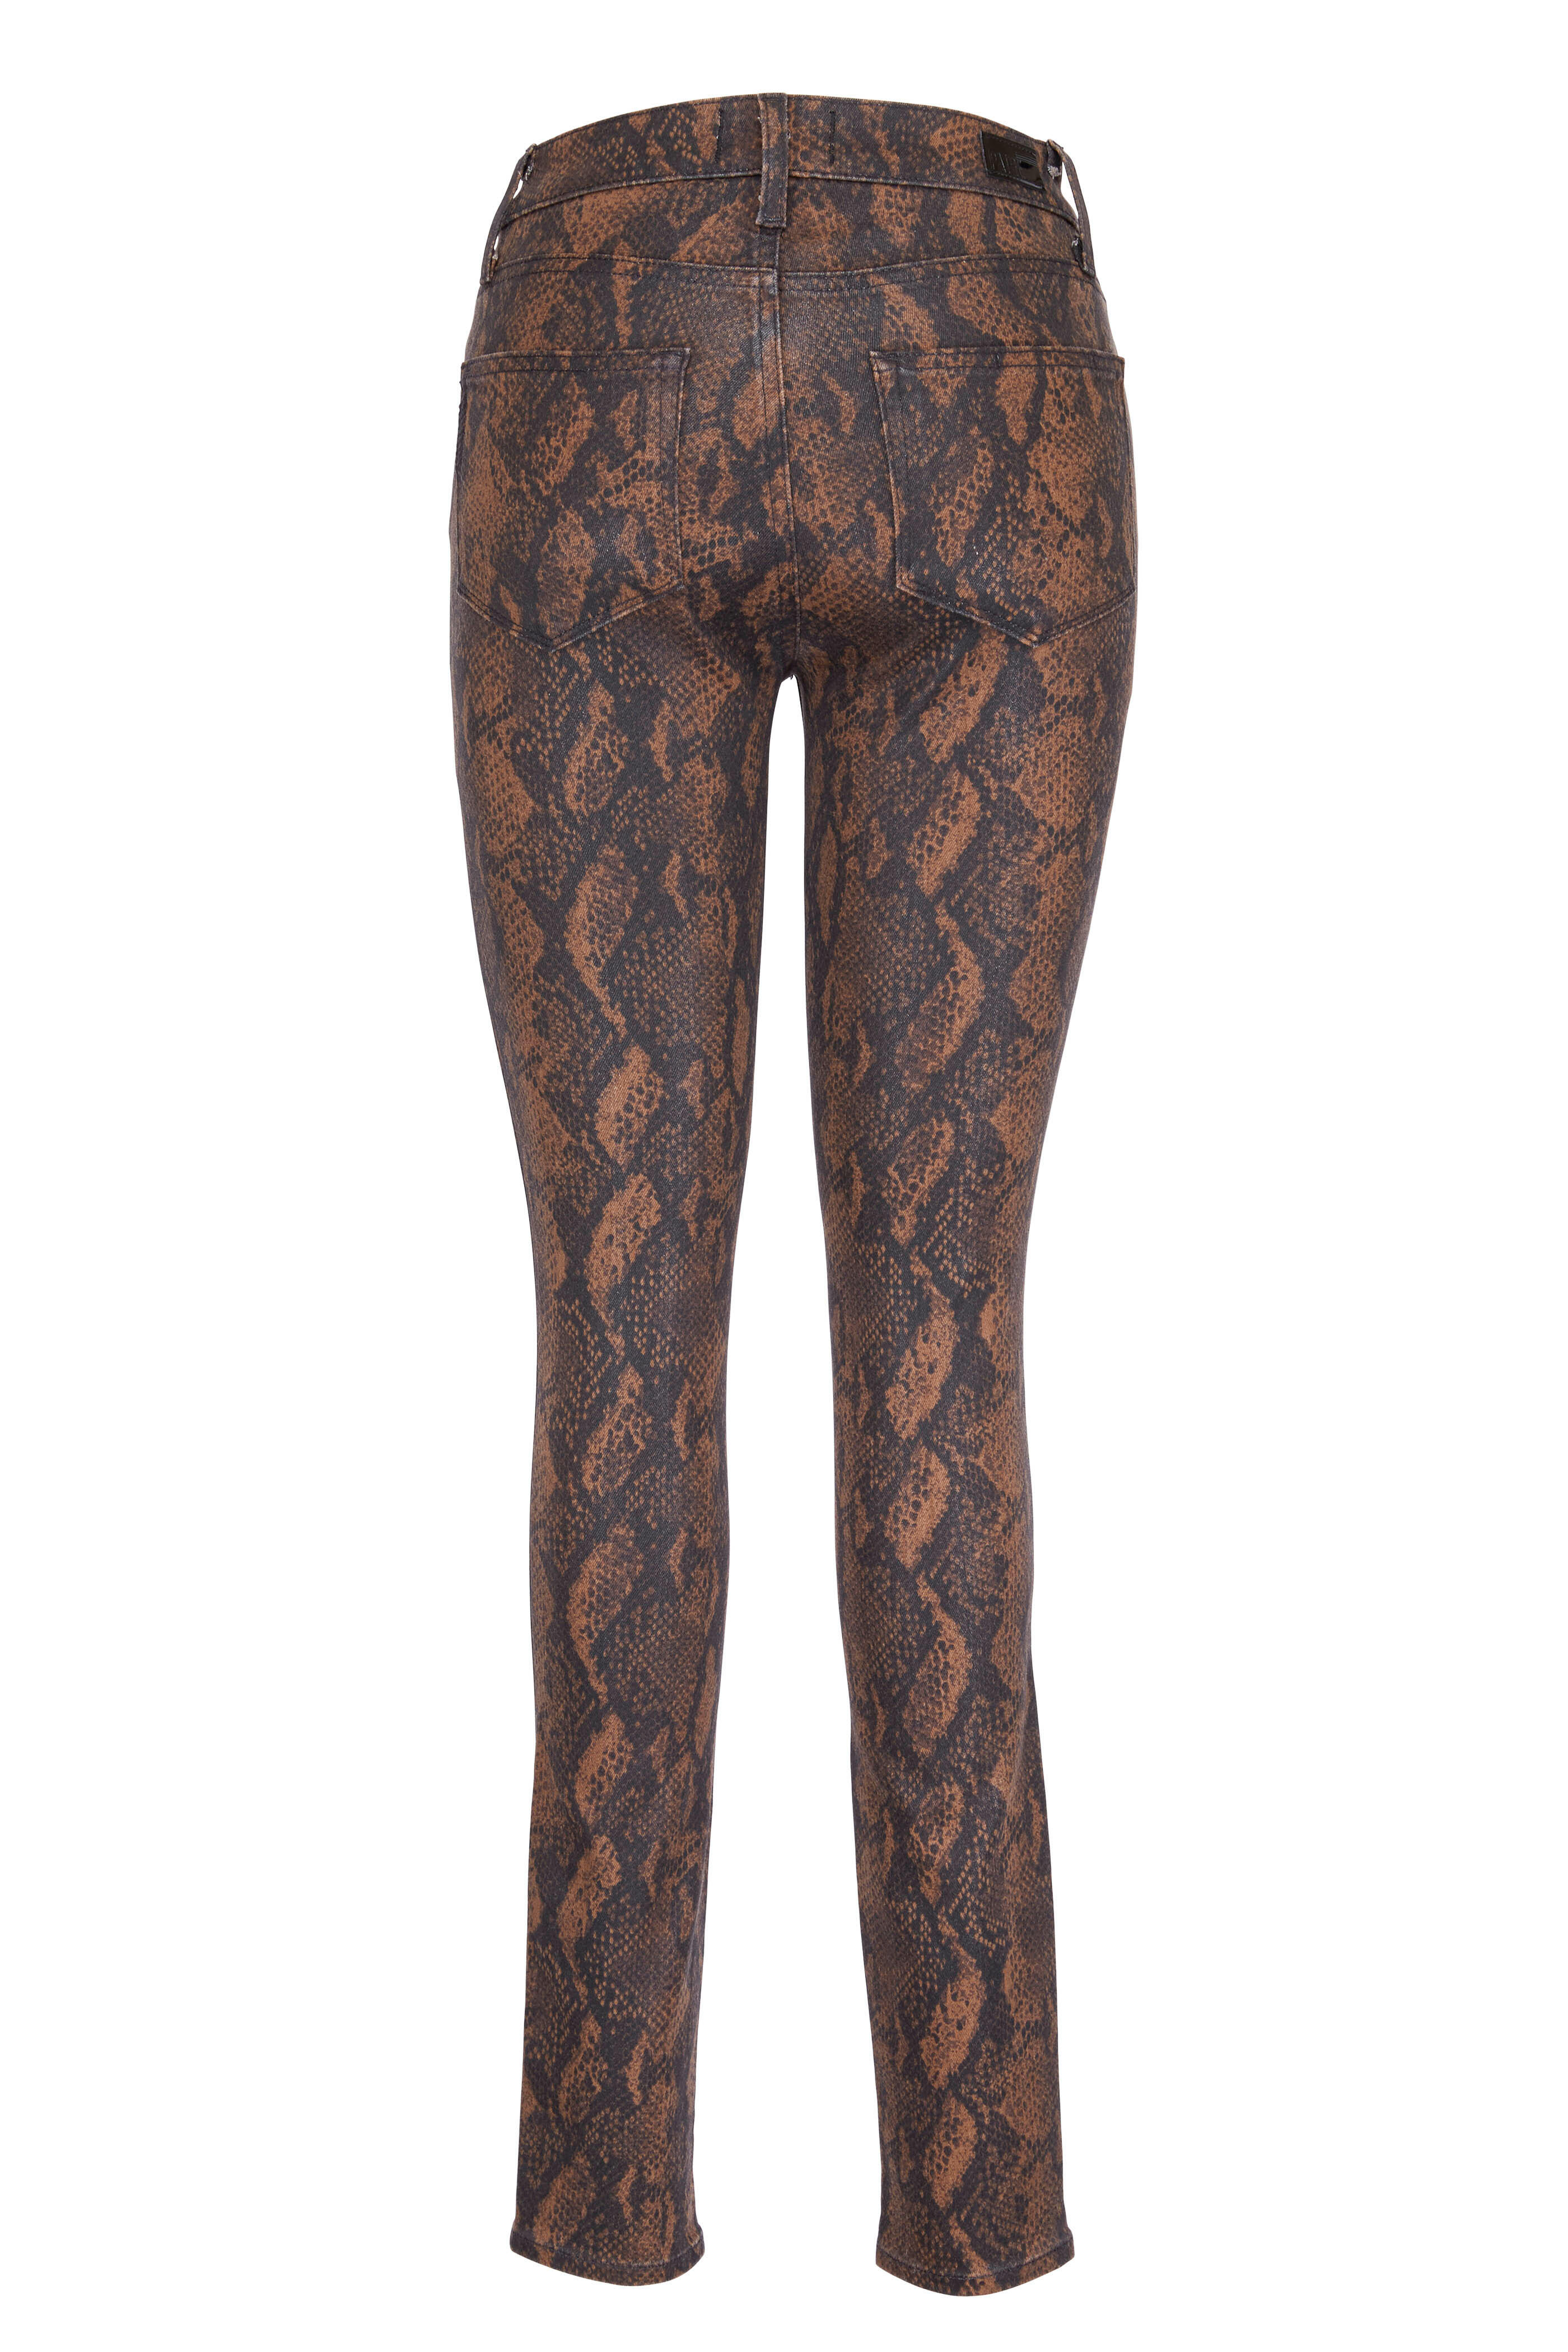 Zara Snake Print Brown Jeans Size 4 - 46% off